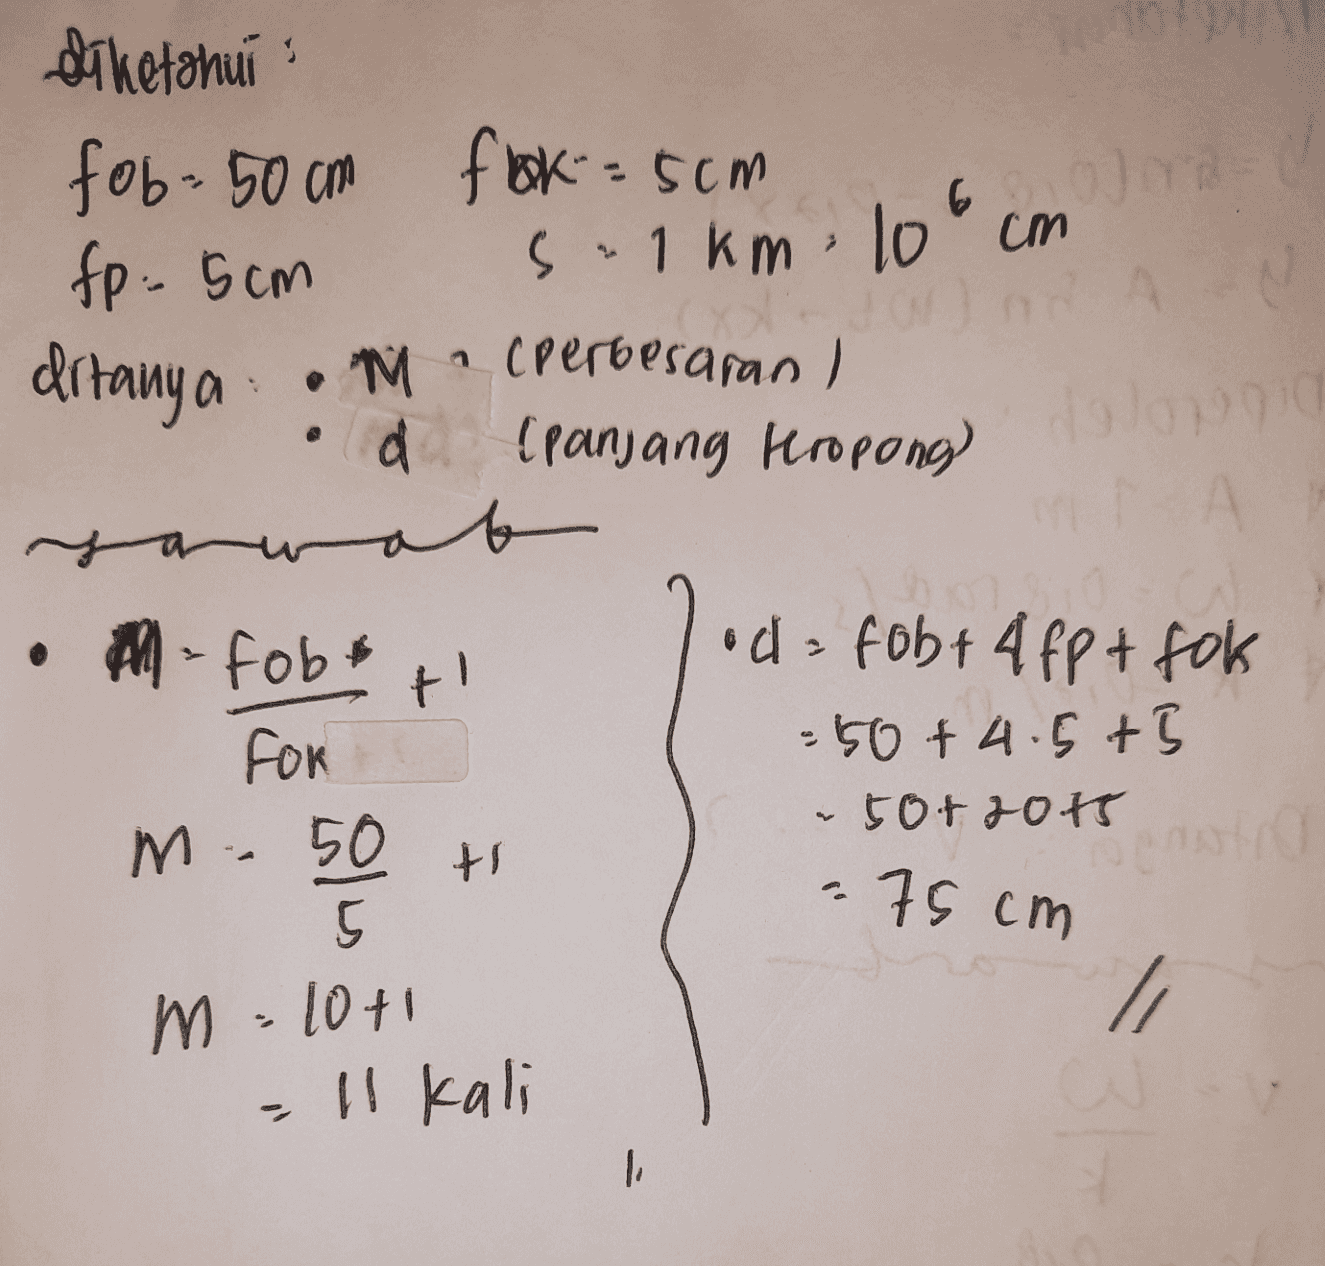 s. 1km 106 cm diketahui fob: 50cm flak = 5cm fp. 5cm ditanya M. (perbesaran ) d (panjang Hropong ) at • All - fob od=fob+ 4 fp+ fok + for = 150+ 4.5+5 M. 50 5 MA ~50t 2015 ti . 75 cm m=1041 / 11 kali 1 